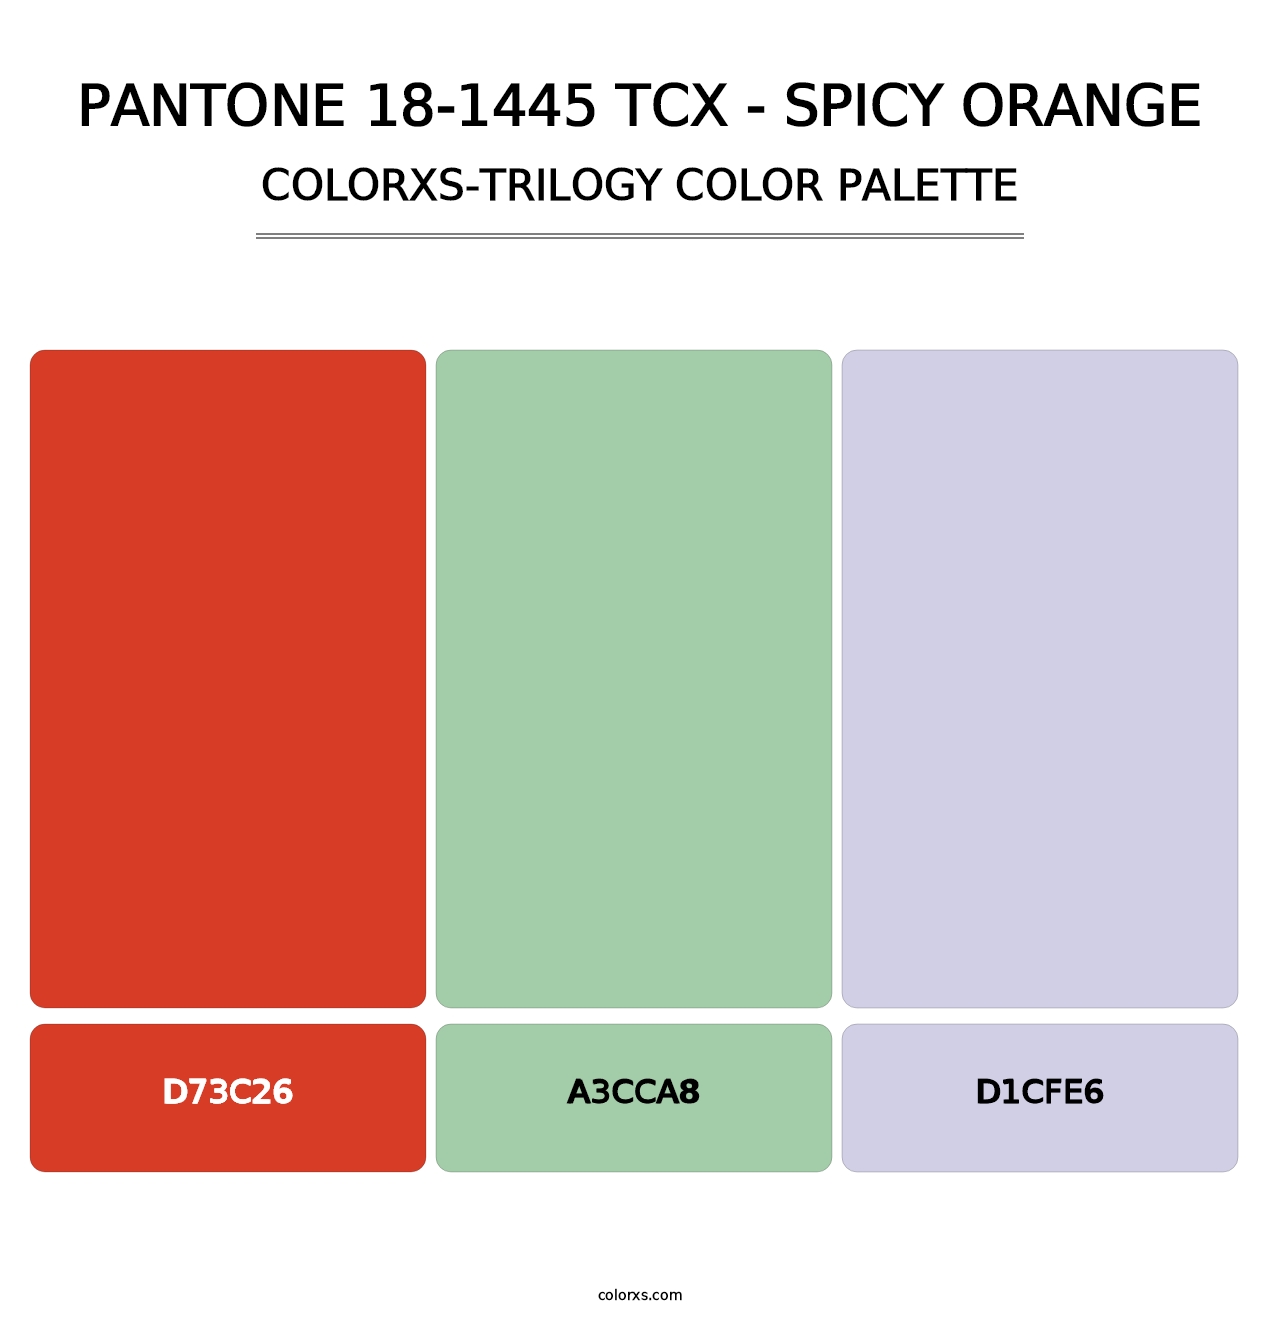 PANTONE 18-1445 TCX - Spicy Orange - Colorxs Trilogy Palette